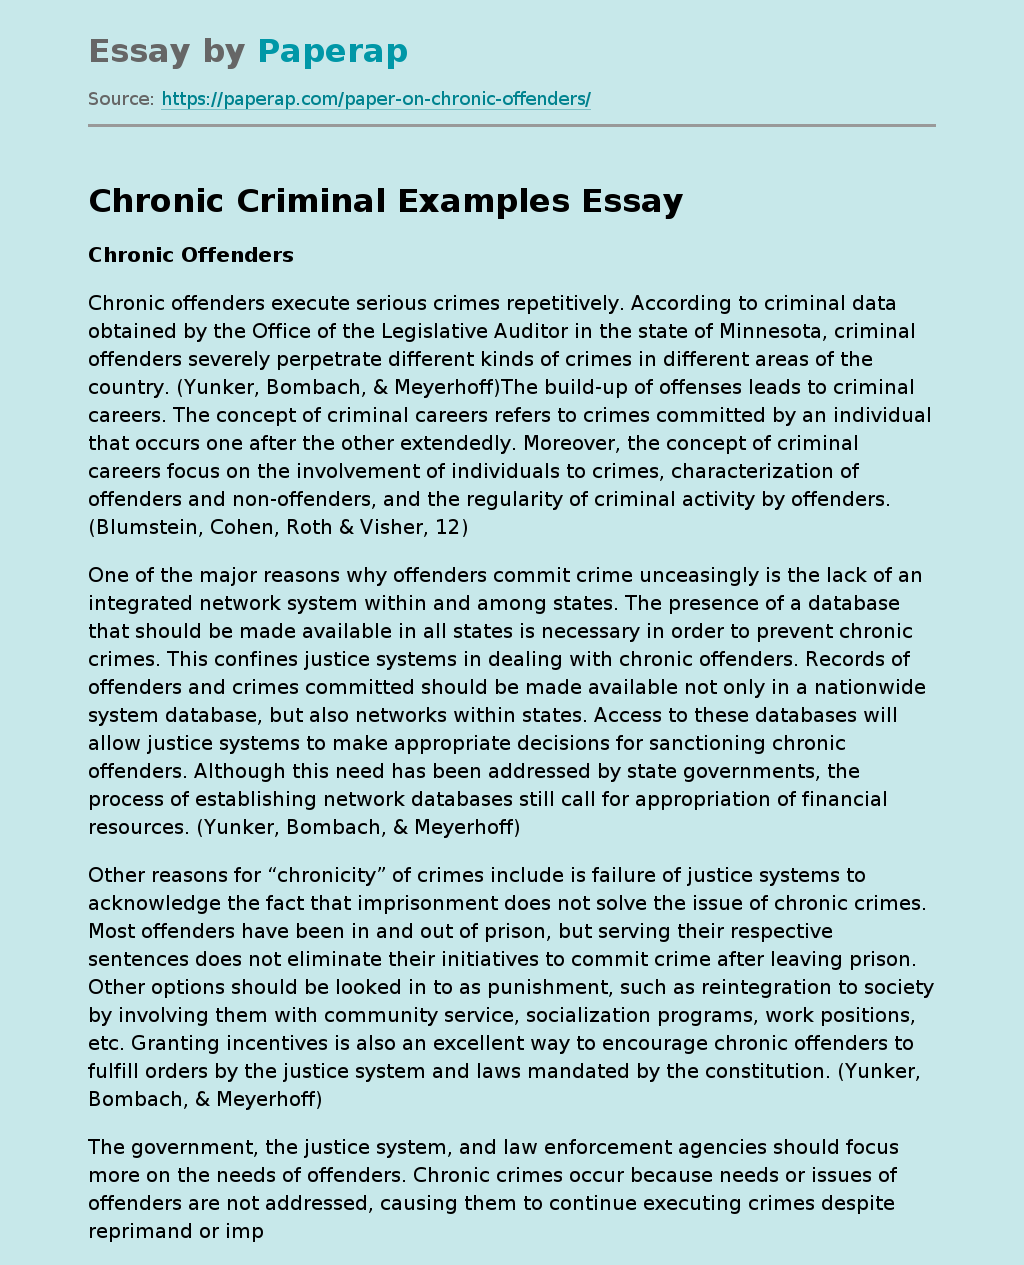 Chronic Criminal Examples